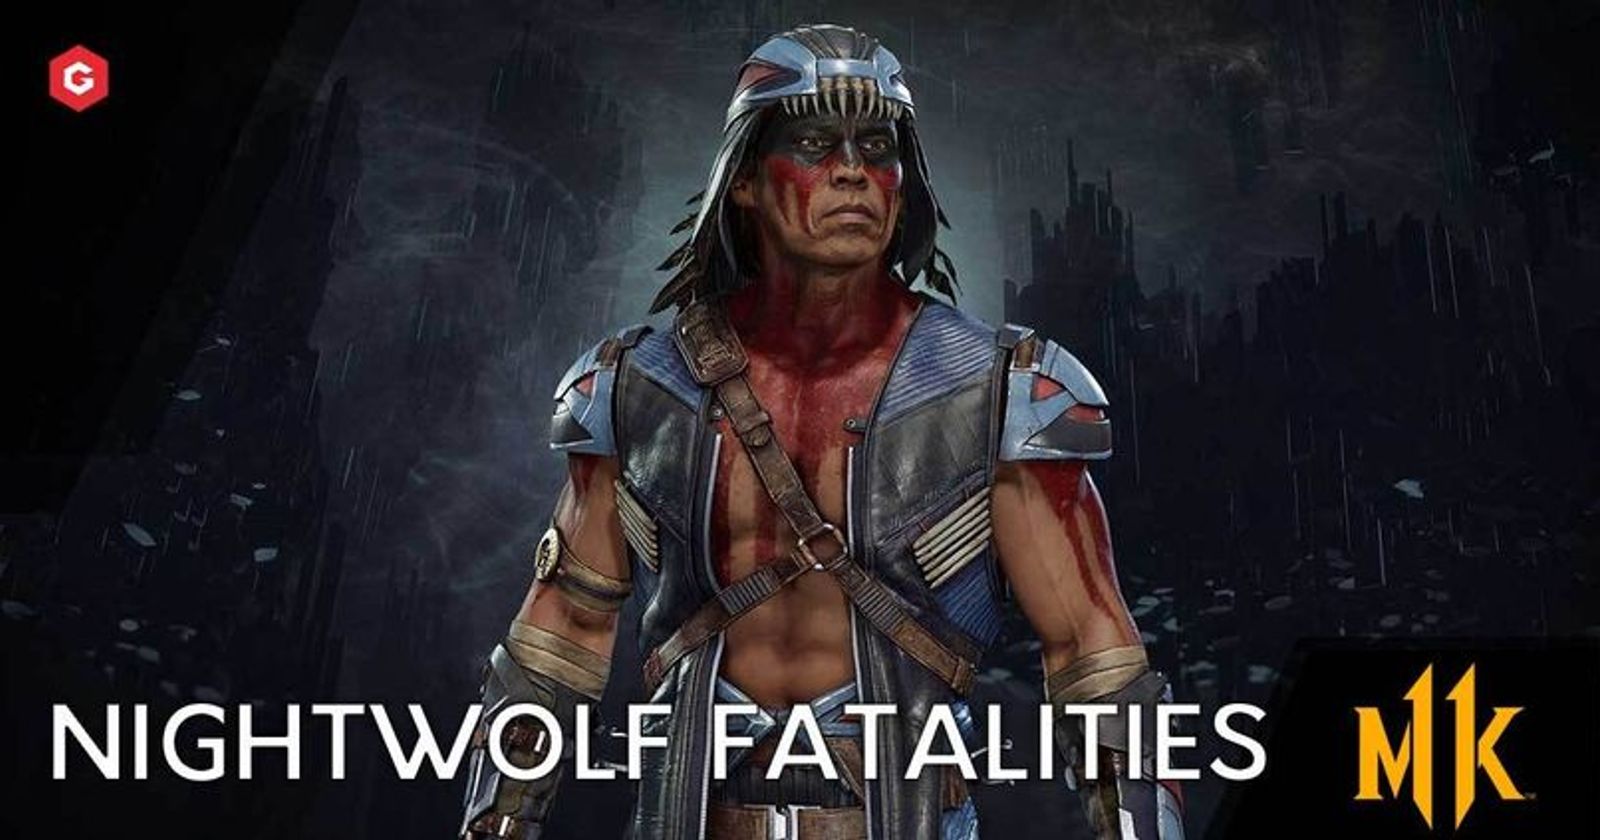 Mortal Kombat 11 Fatality Inputs List: How to perform all